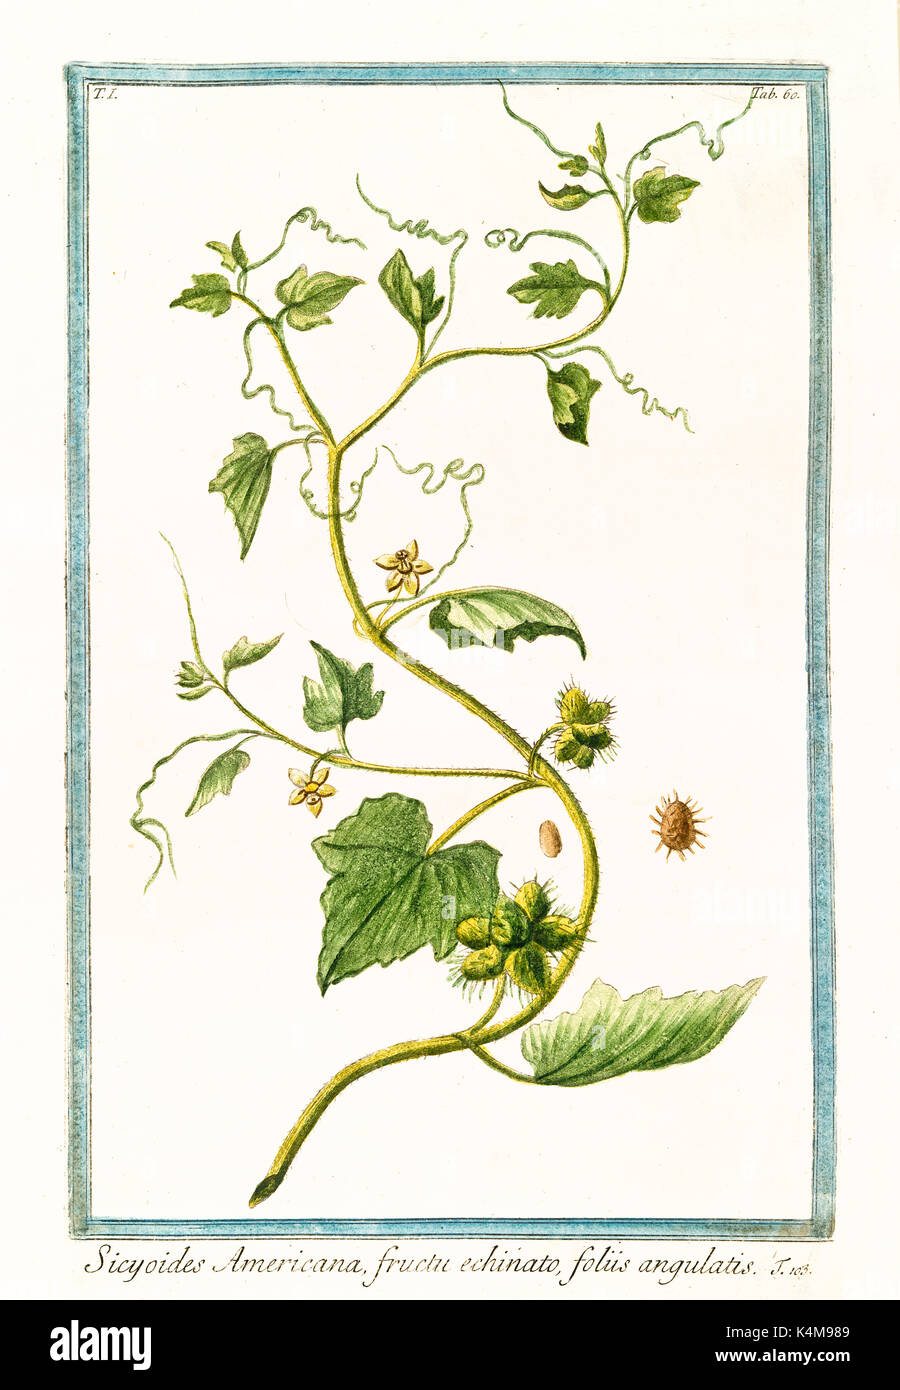 Old illustration of Sicyoides americana (Cissus sicyoides). By G. Bonelli on Hortus Romanus, publ. N. Martelli, Rome, 1772 – 93 Stock Photo